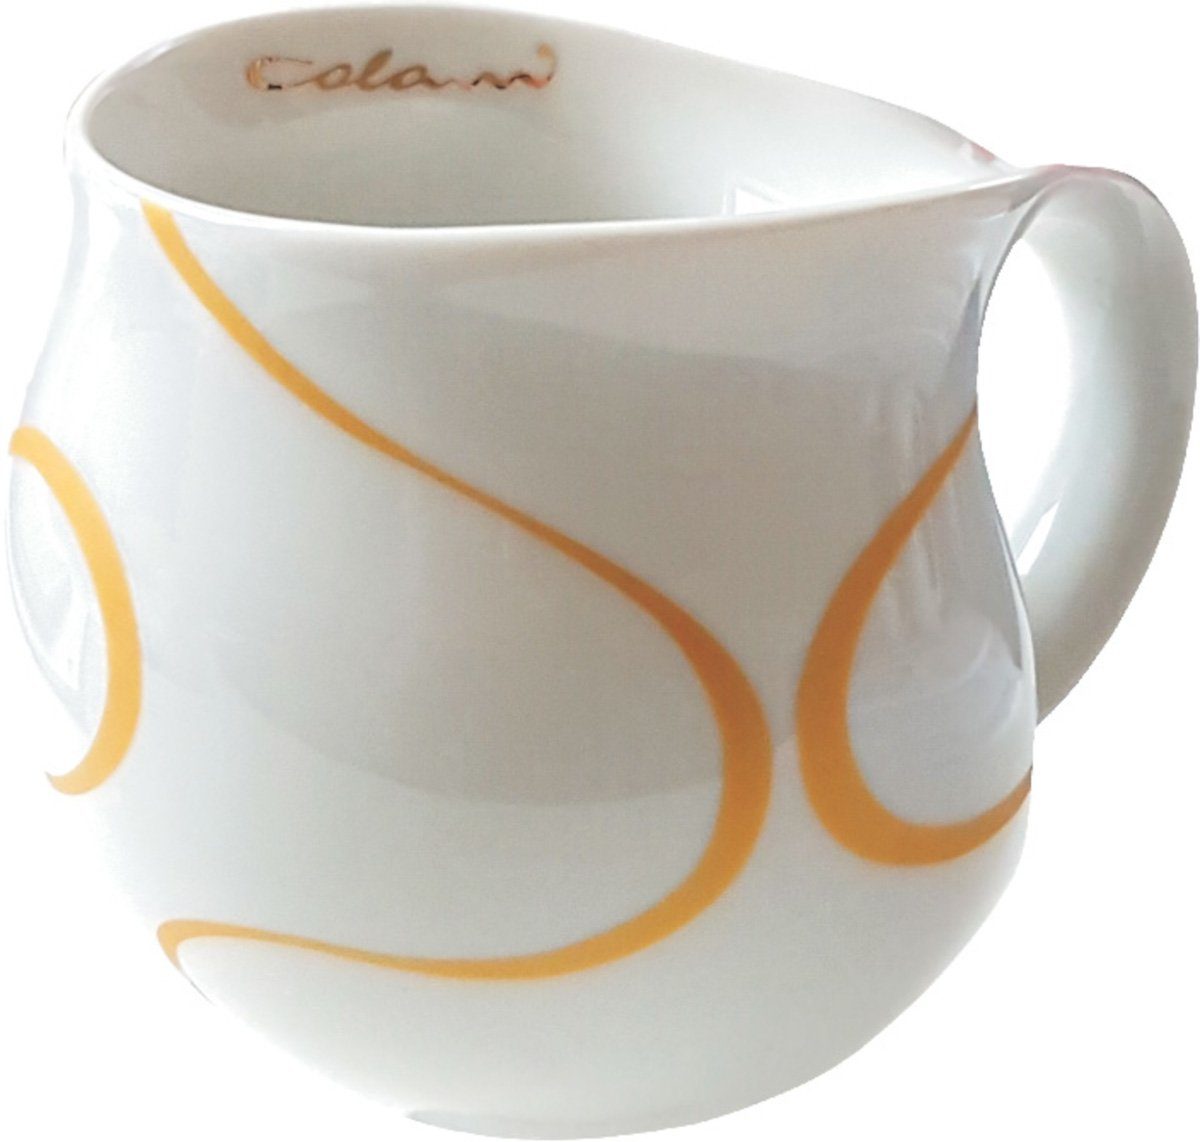 Colani Tasse Dekorierte Kaffeetasse Cappuccinotasse Kaffeebecher Loop gold 260 ml, Porzellan, Colani Schriftzug, im Geschenkkarton